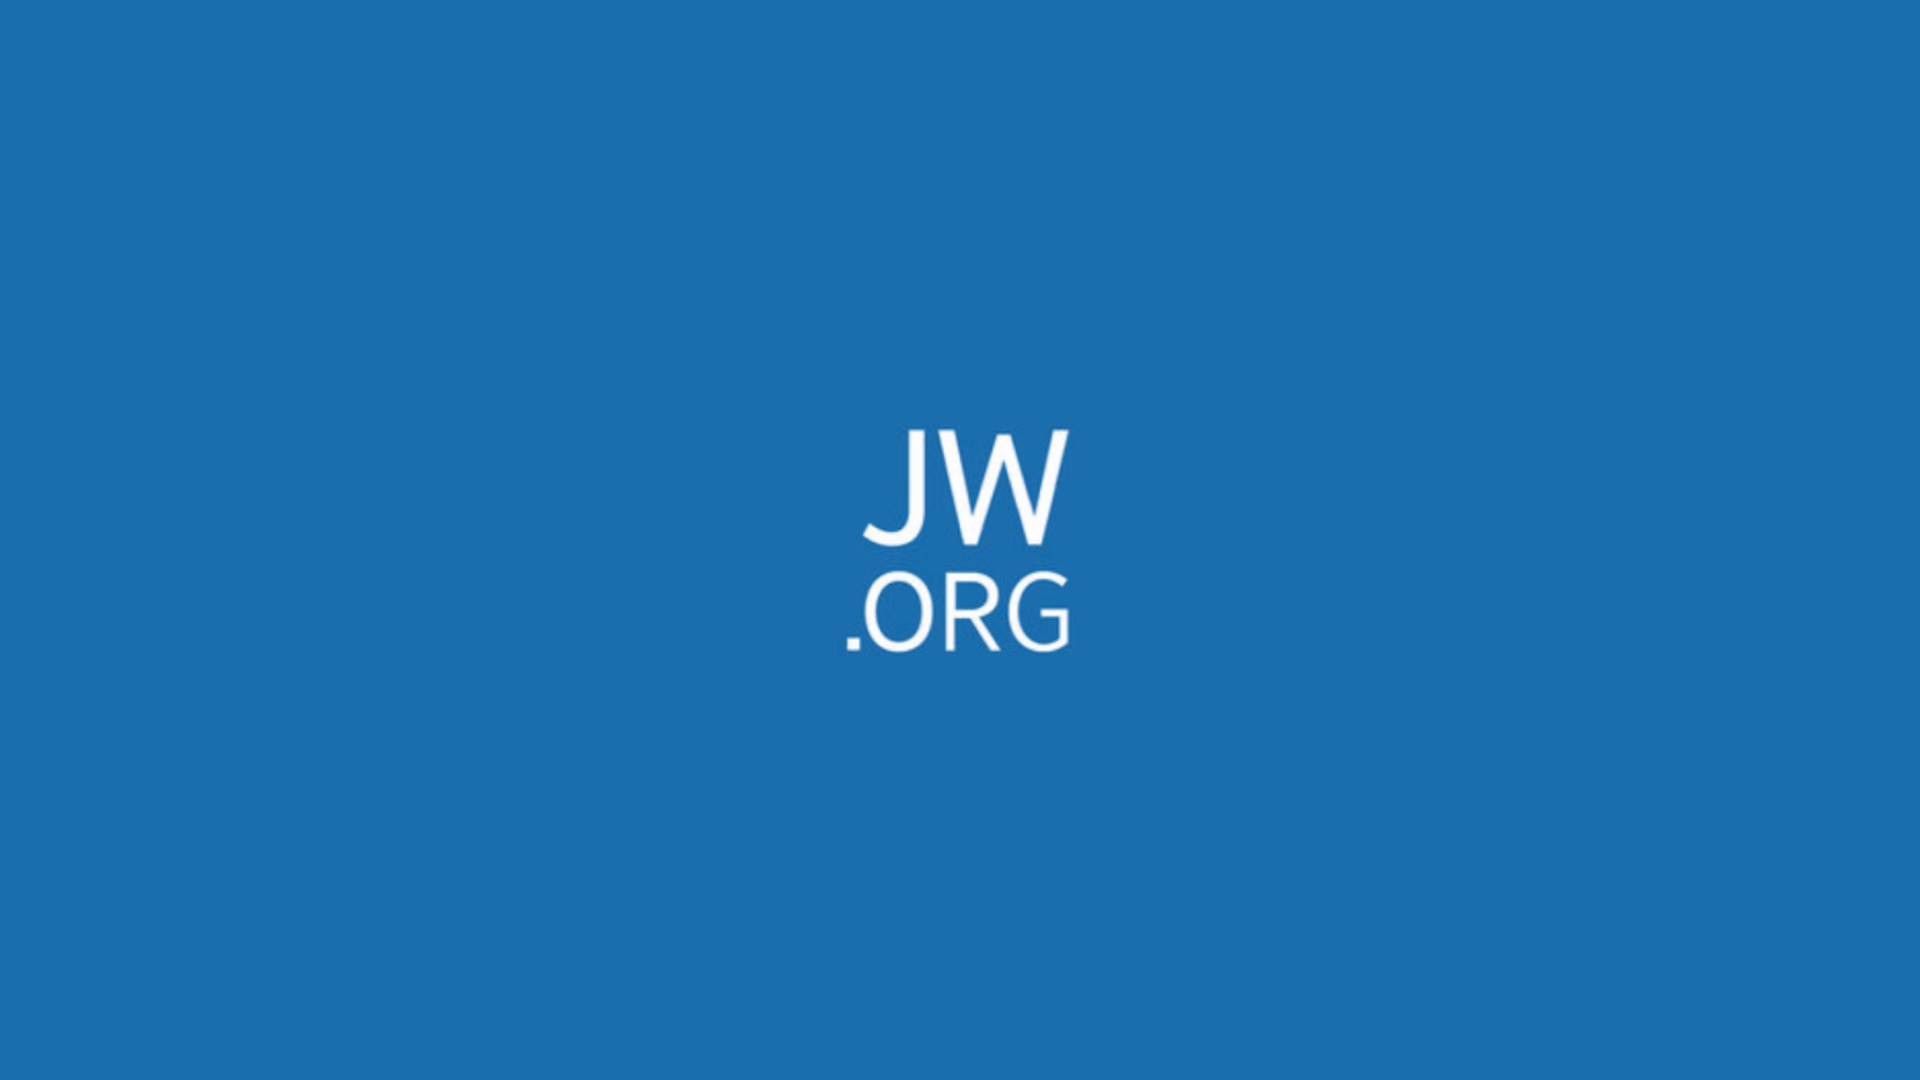 Jw Org Wallpaper Desktop. Jw.org, Magazine web